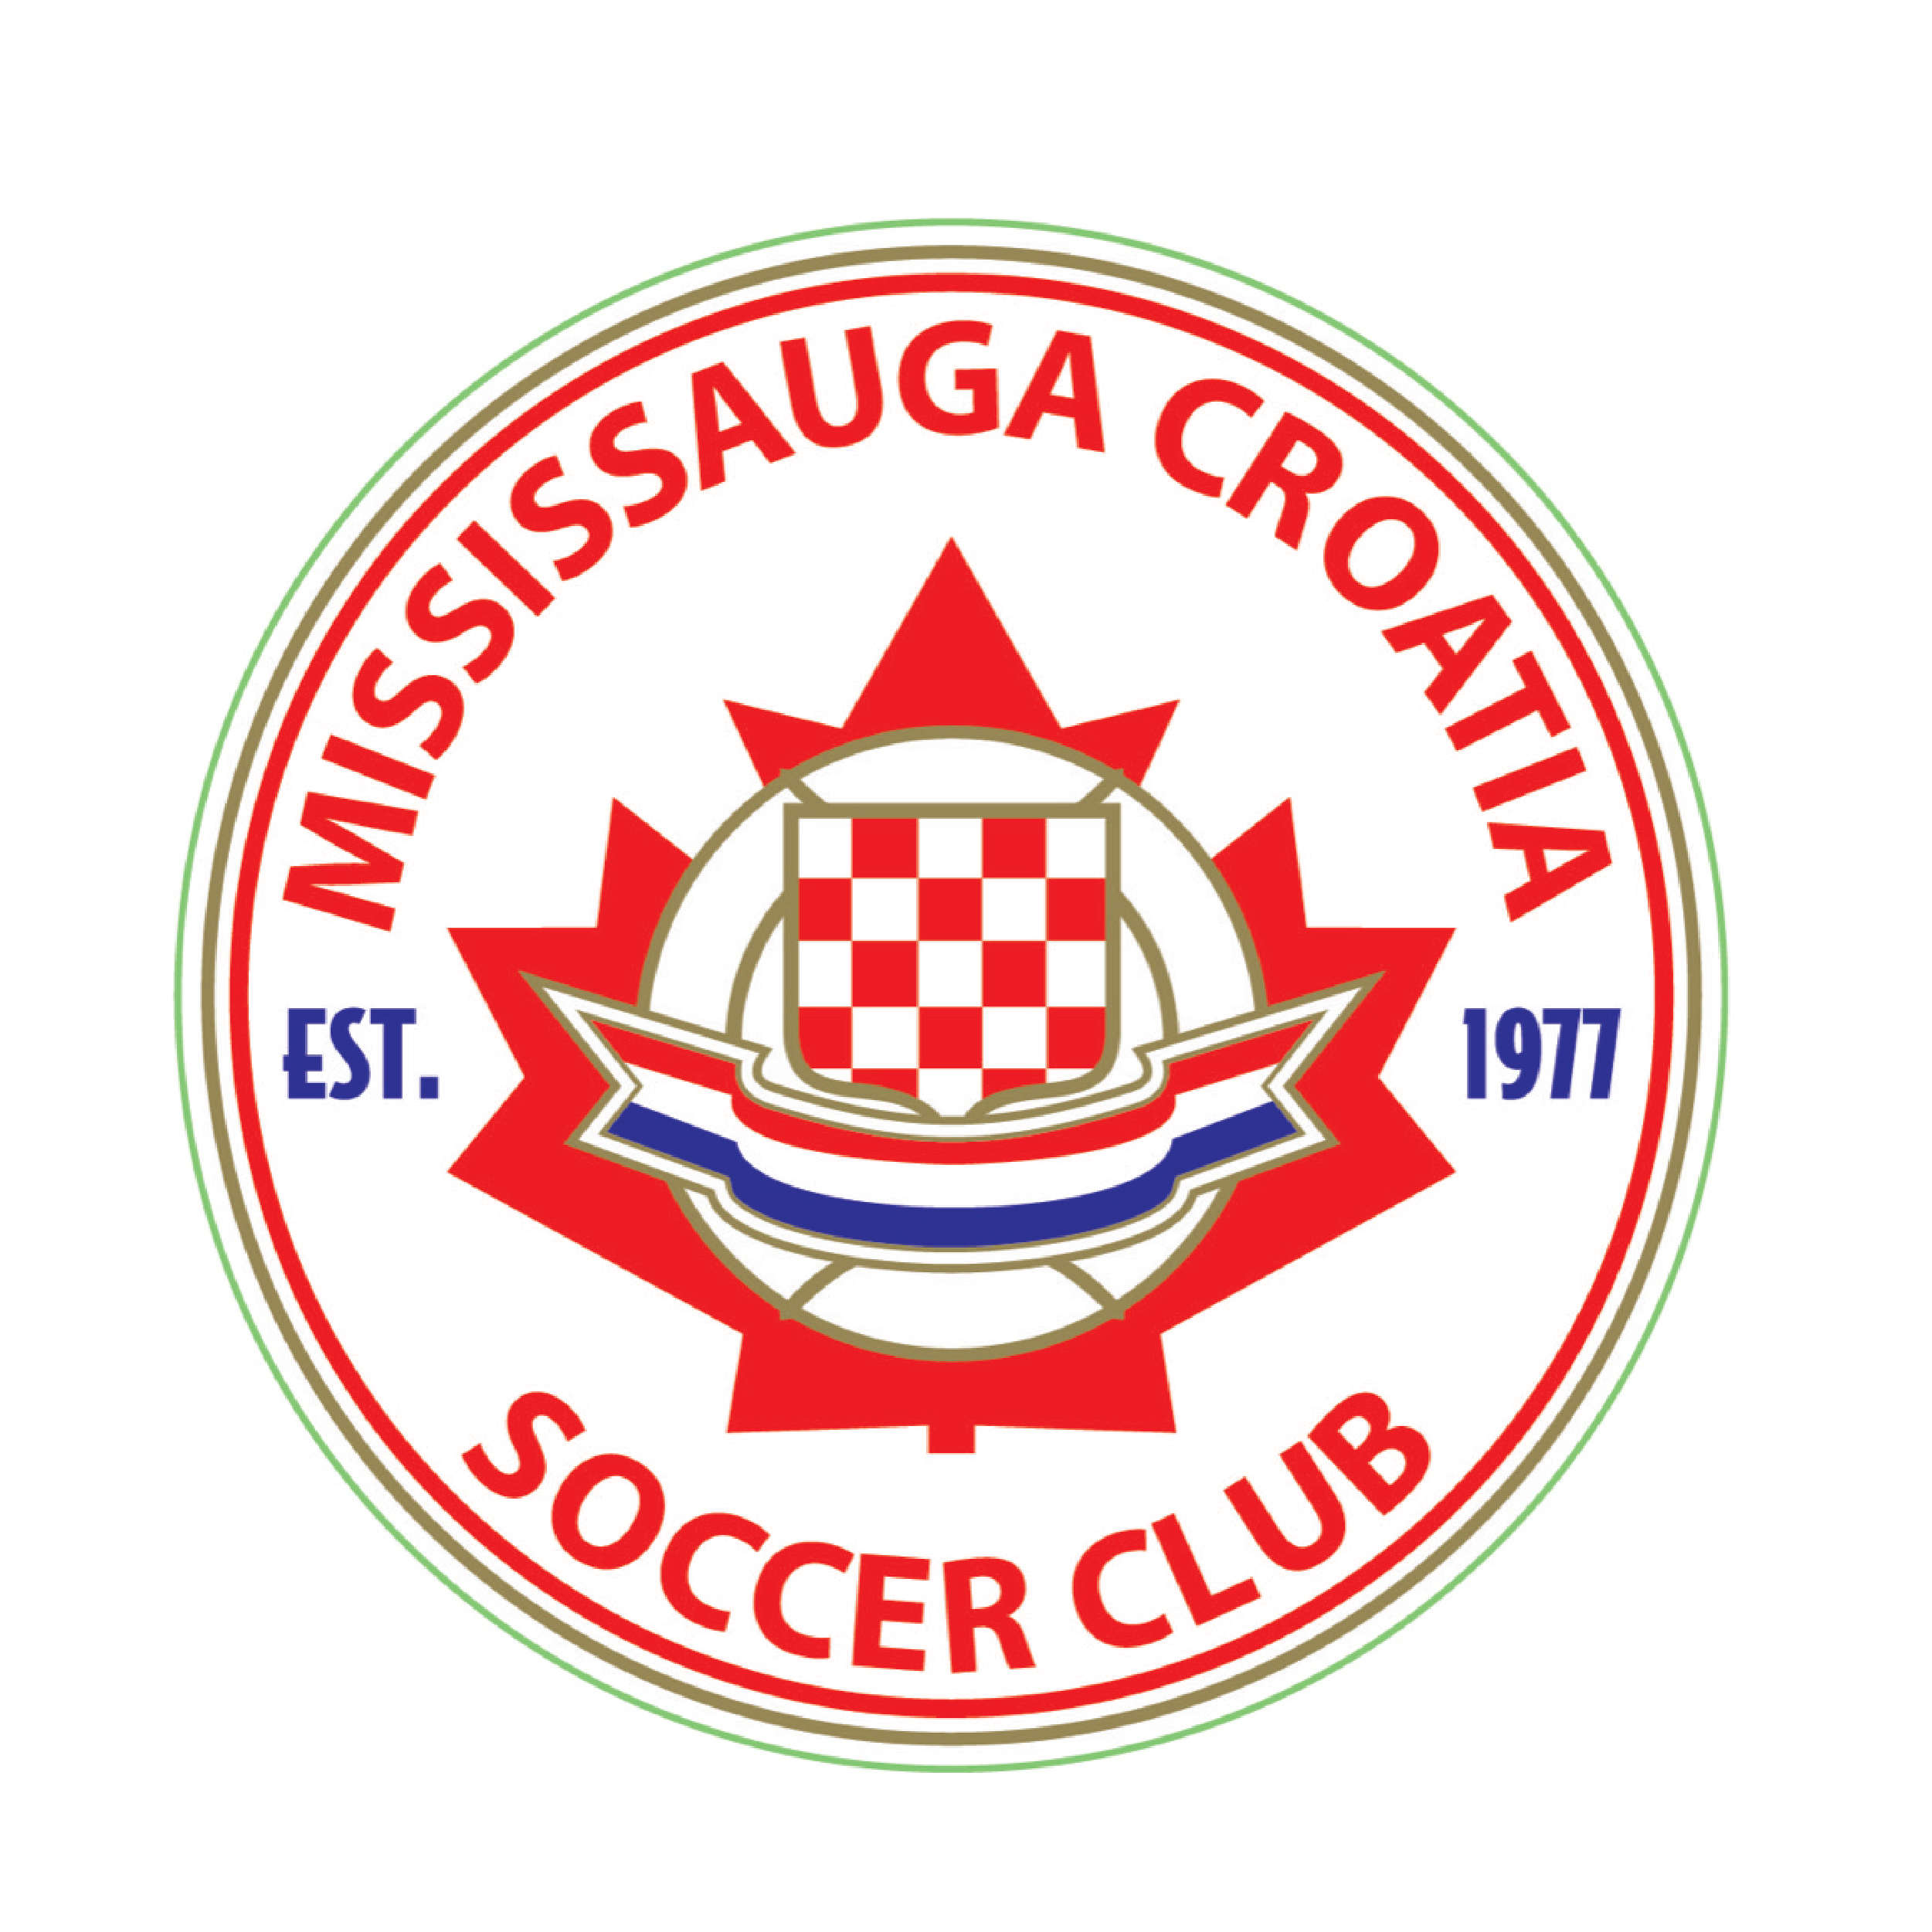 Mississauga Croatia Soccer Club